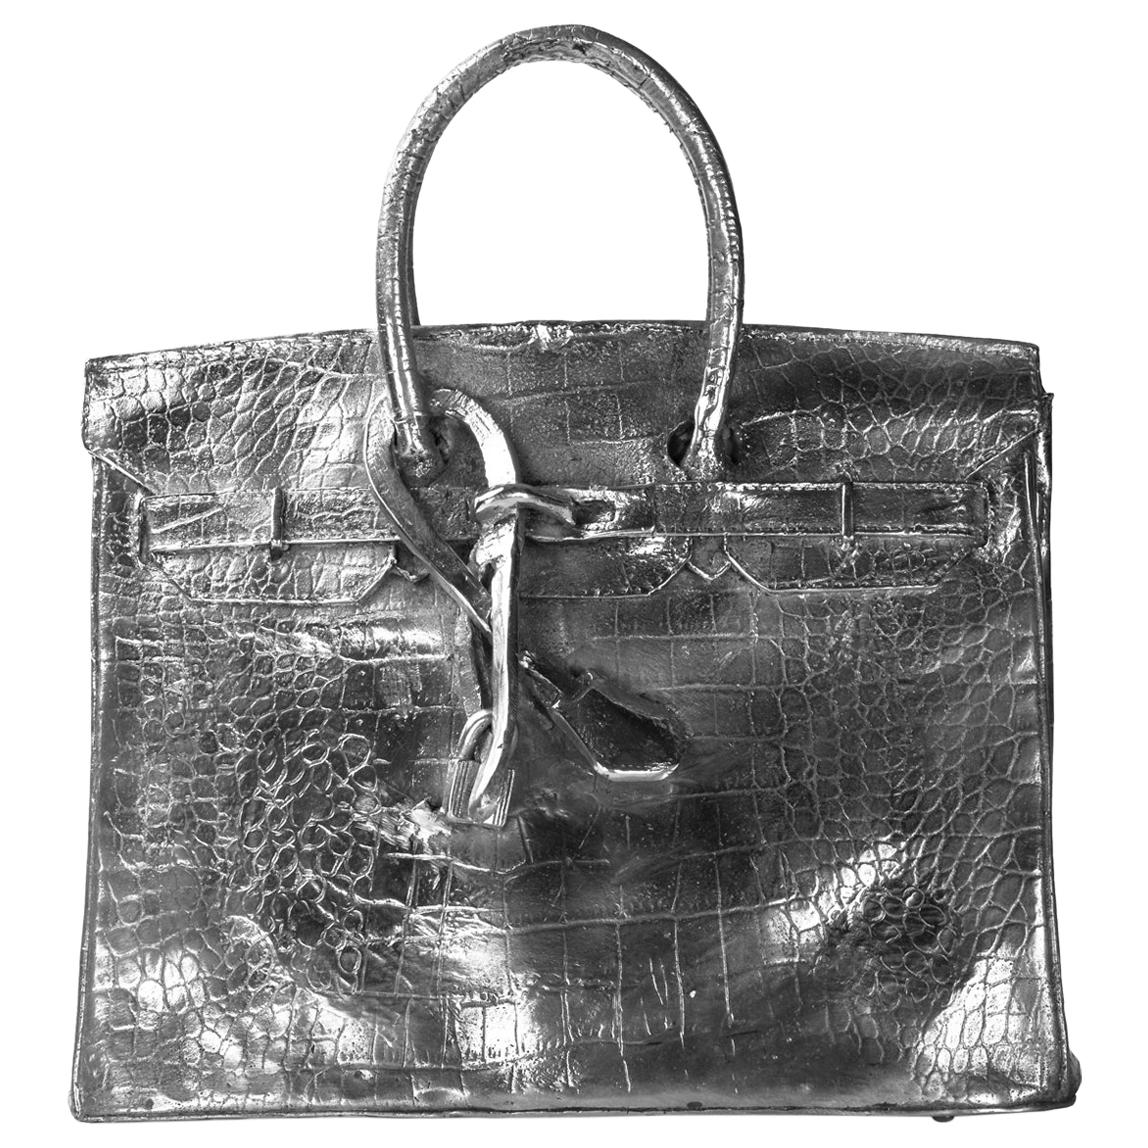 Hermes Birkin Bag Cast Aluminum Sculpture For Sale